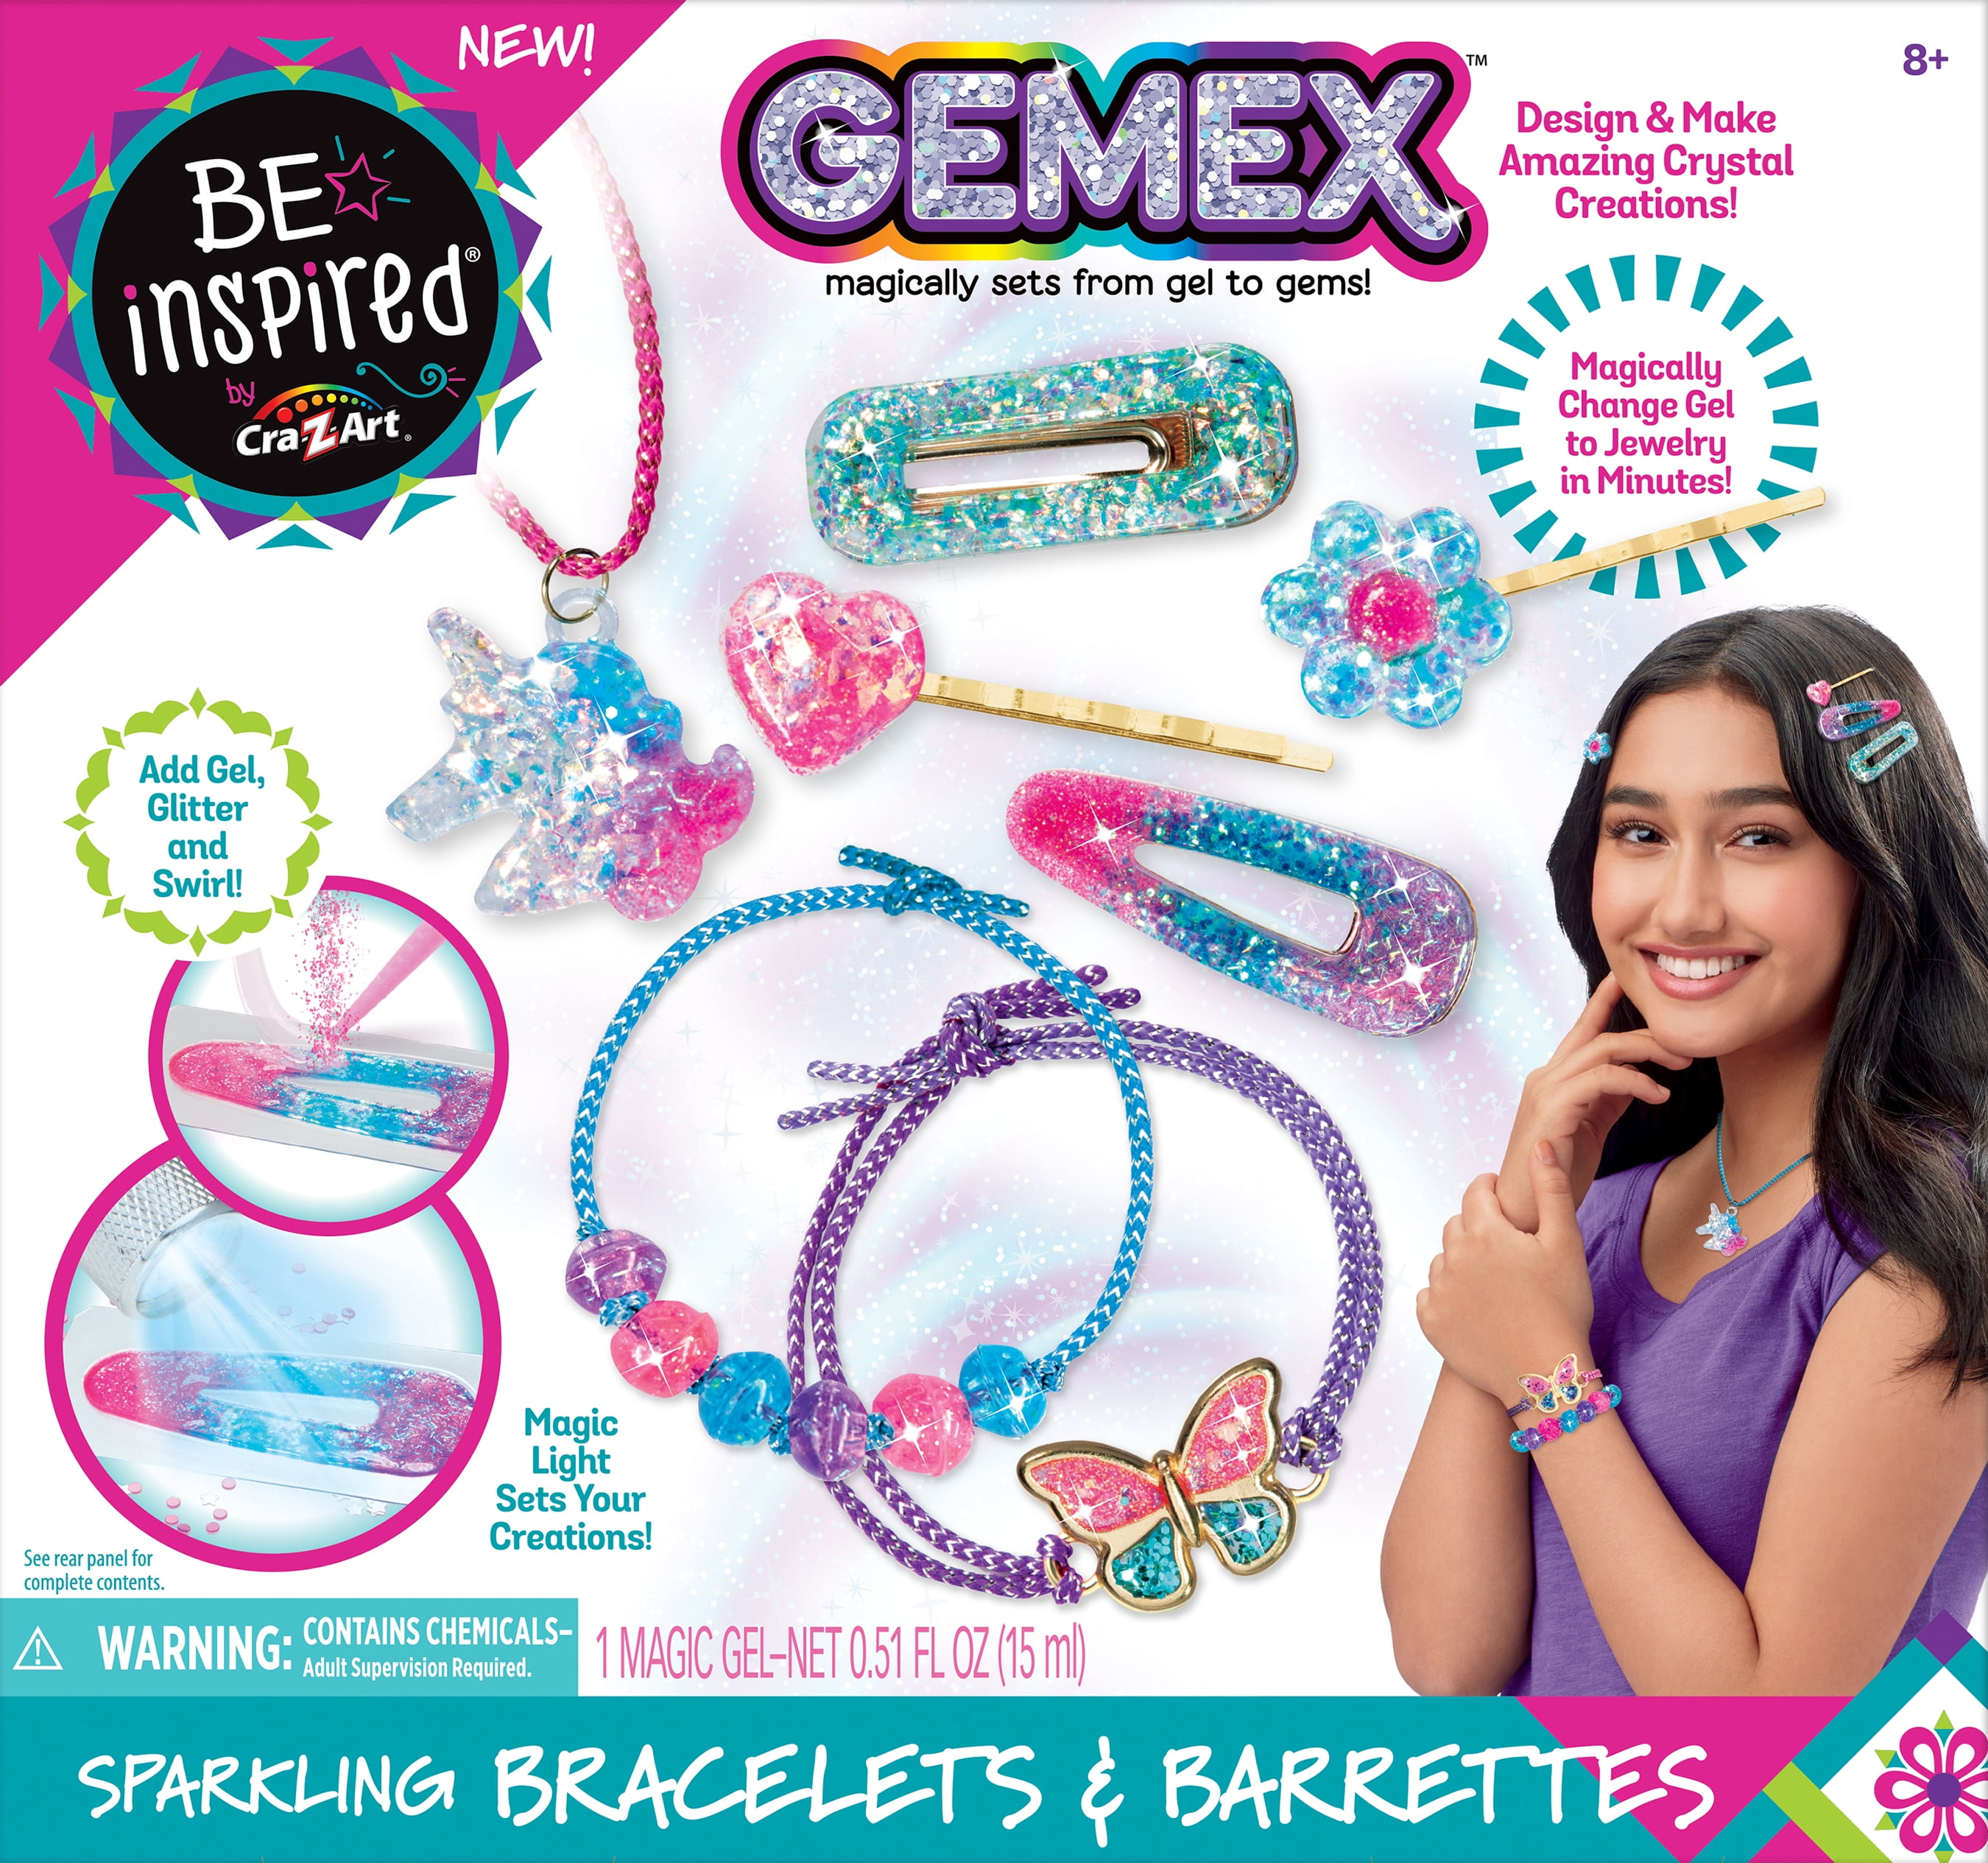 Make Glittery Jewelry with the GEMEX Gel Creations Studio - The